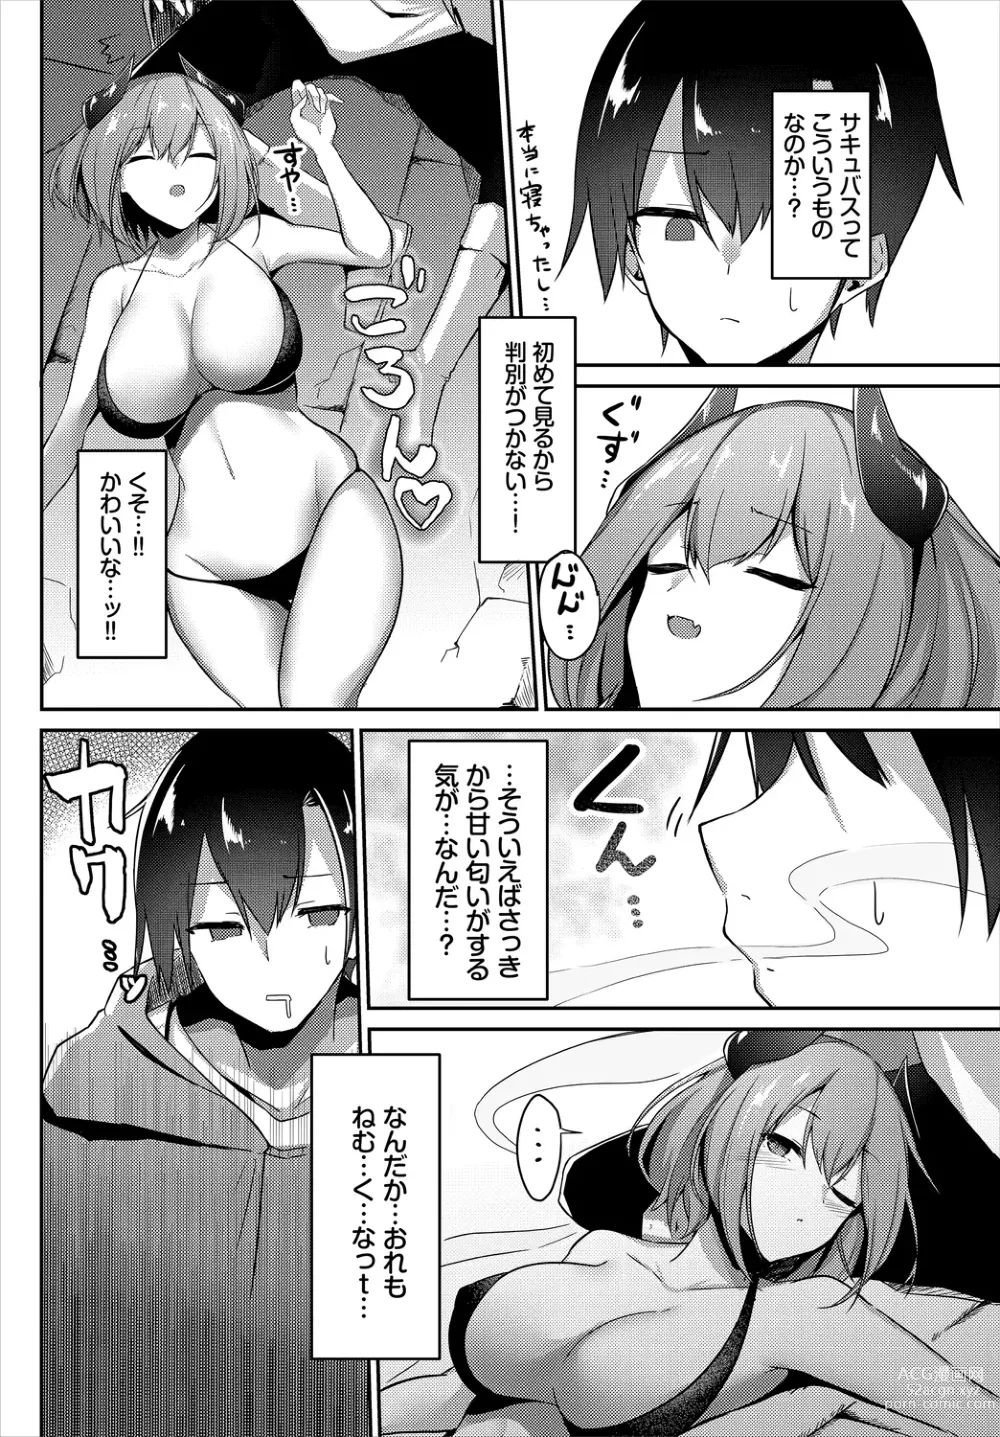 Page 8 of manga Meikyuu Lilac - Laberynth Lilac.